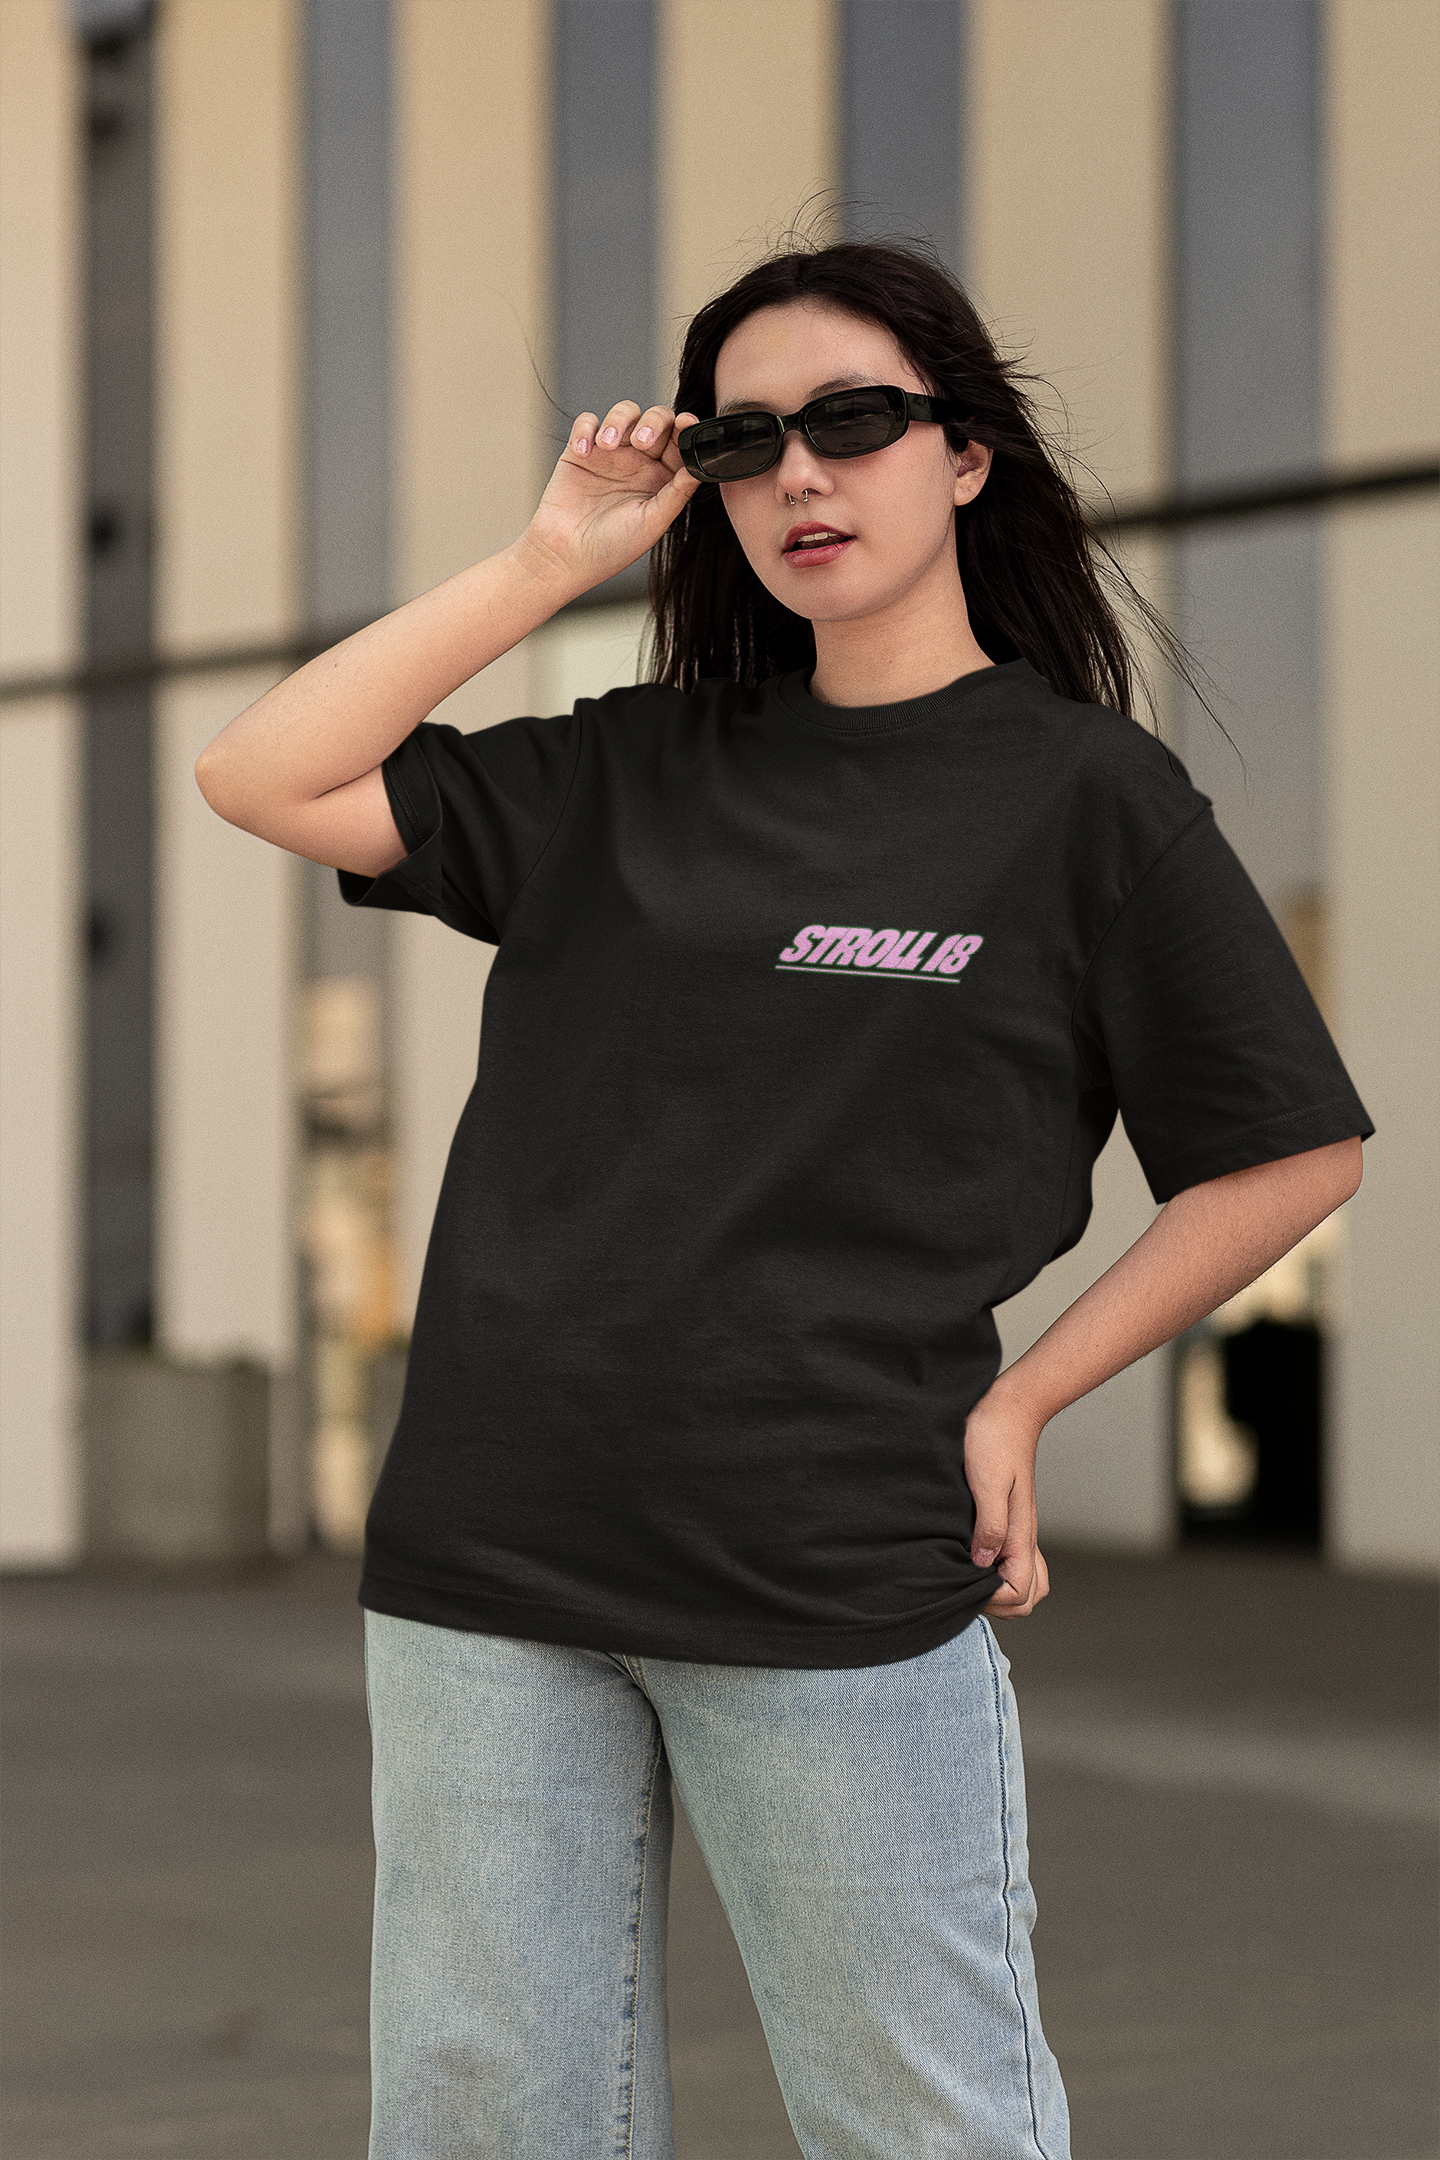 Lance Stroll Premium oversized T-Shirt WOMEN